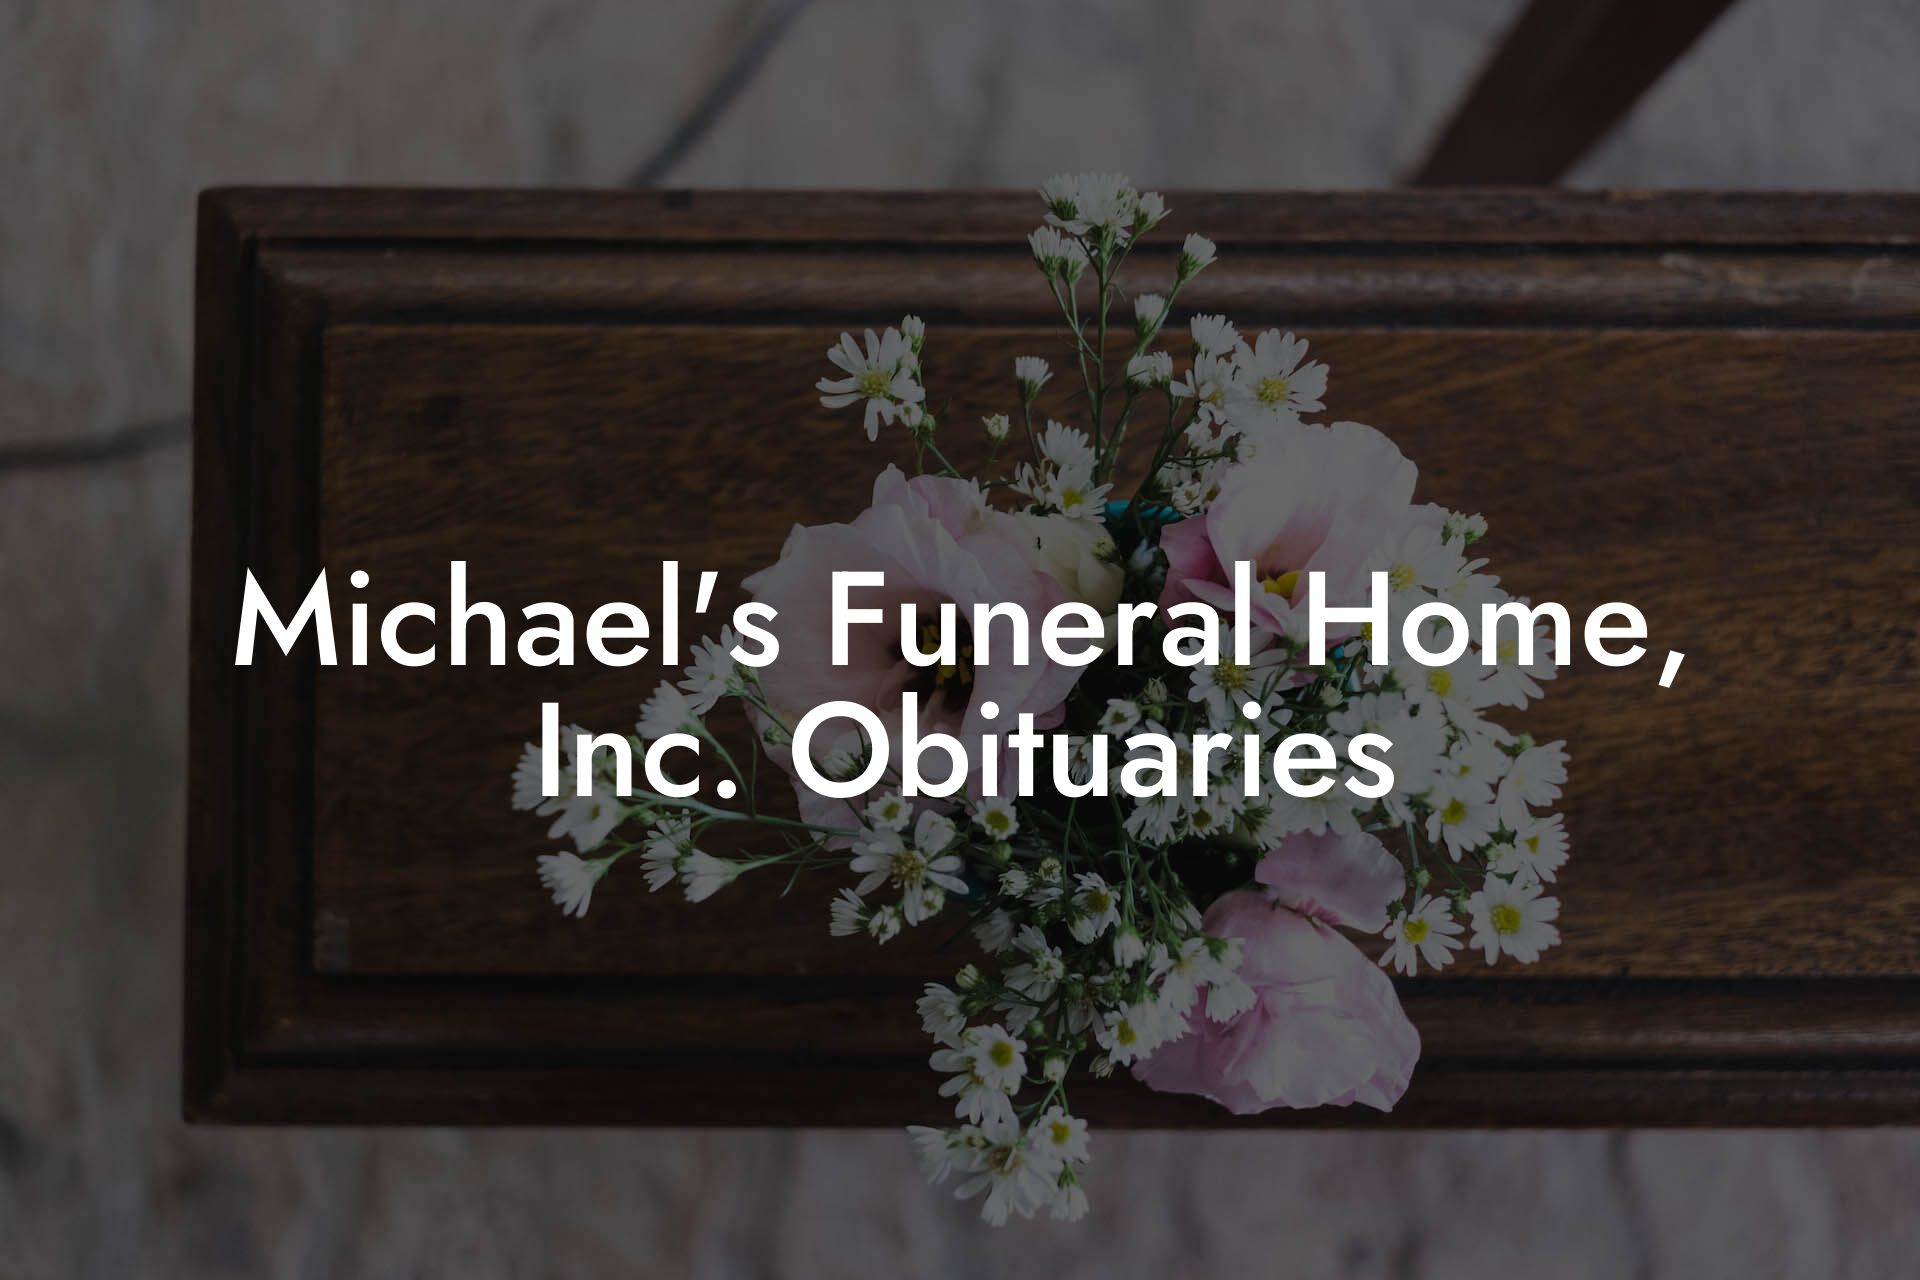 Michael's Funeral Home, Inc. Obituaries